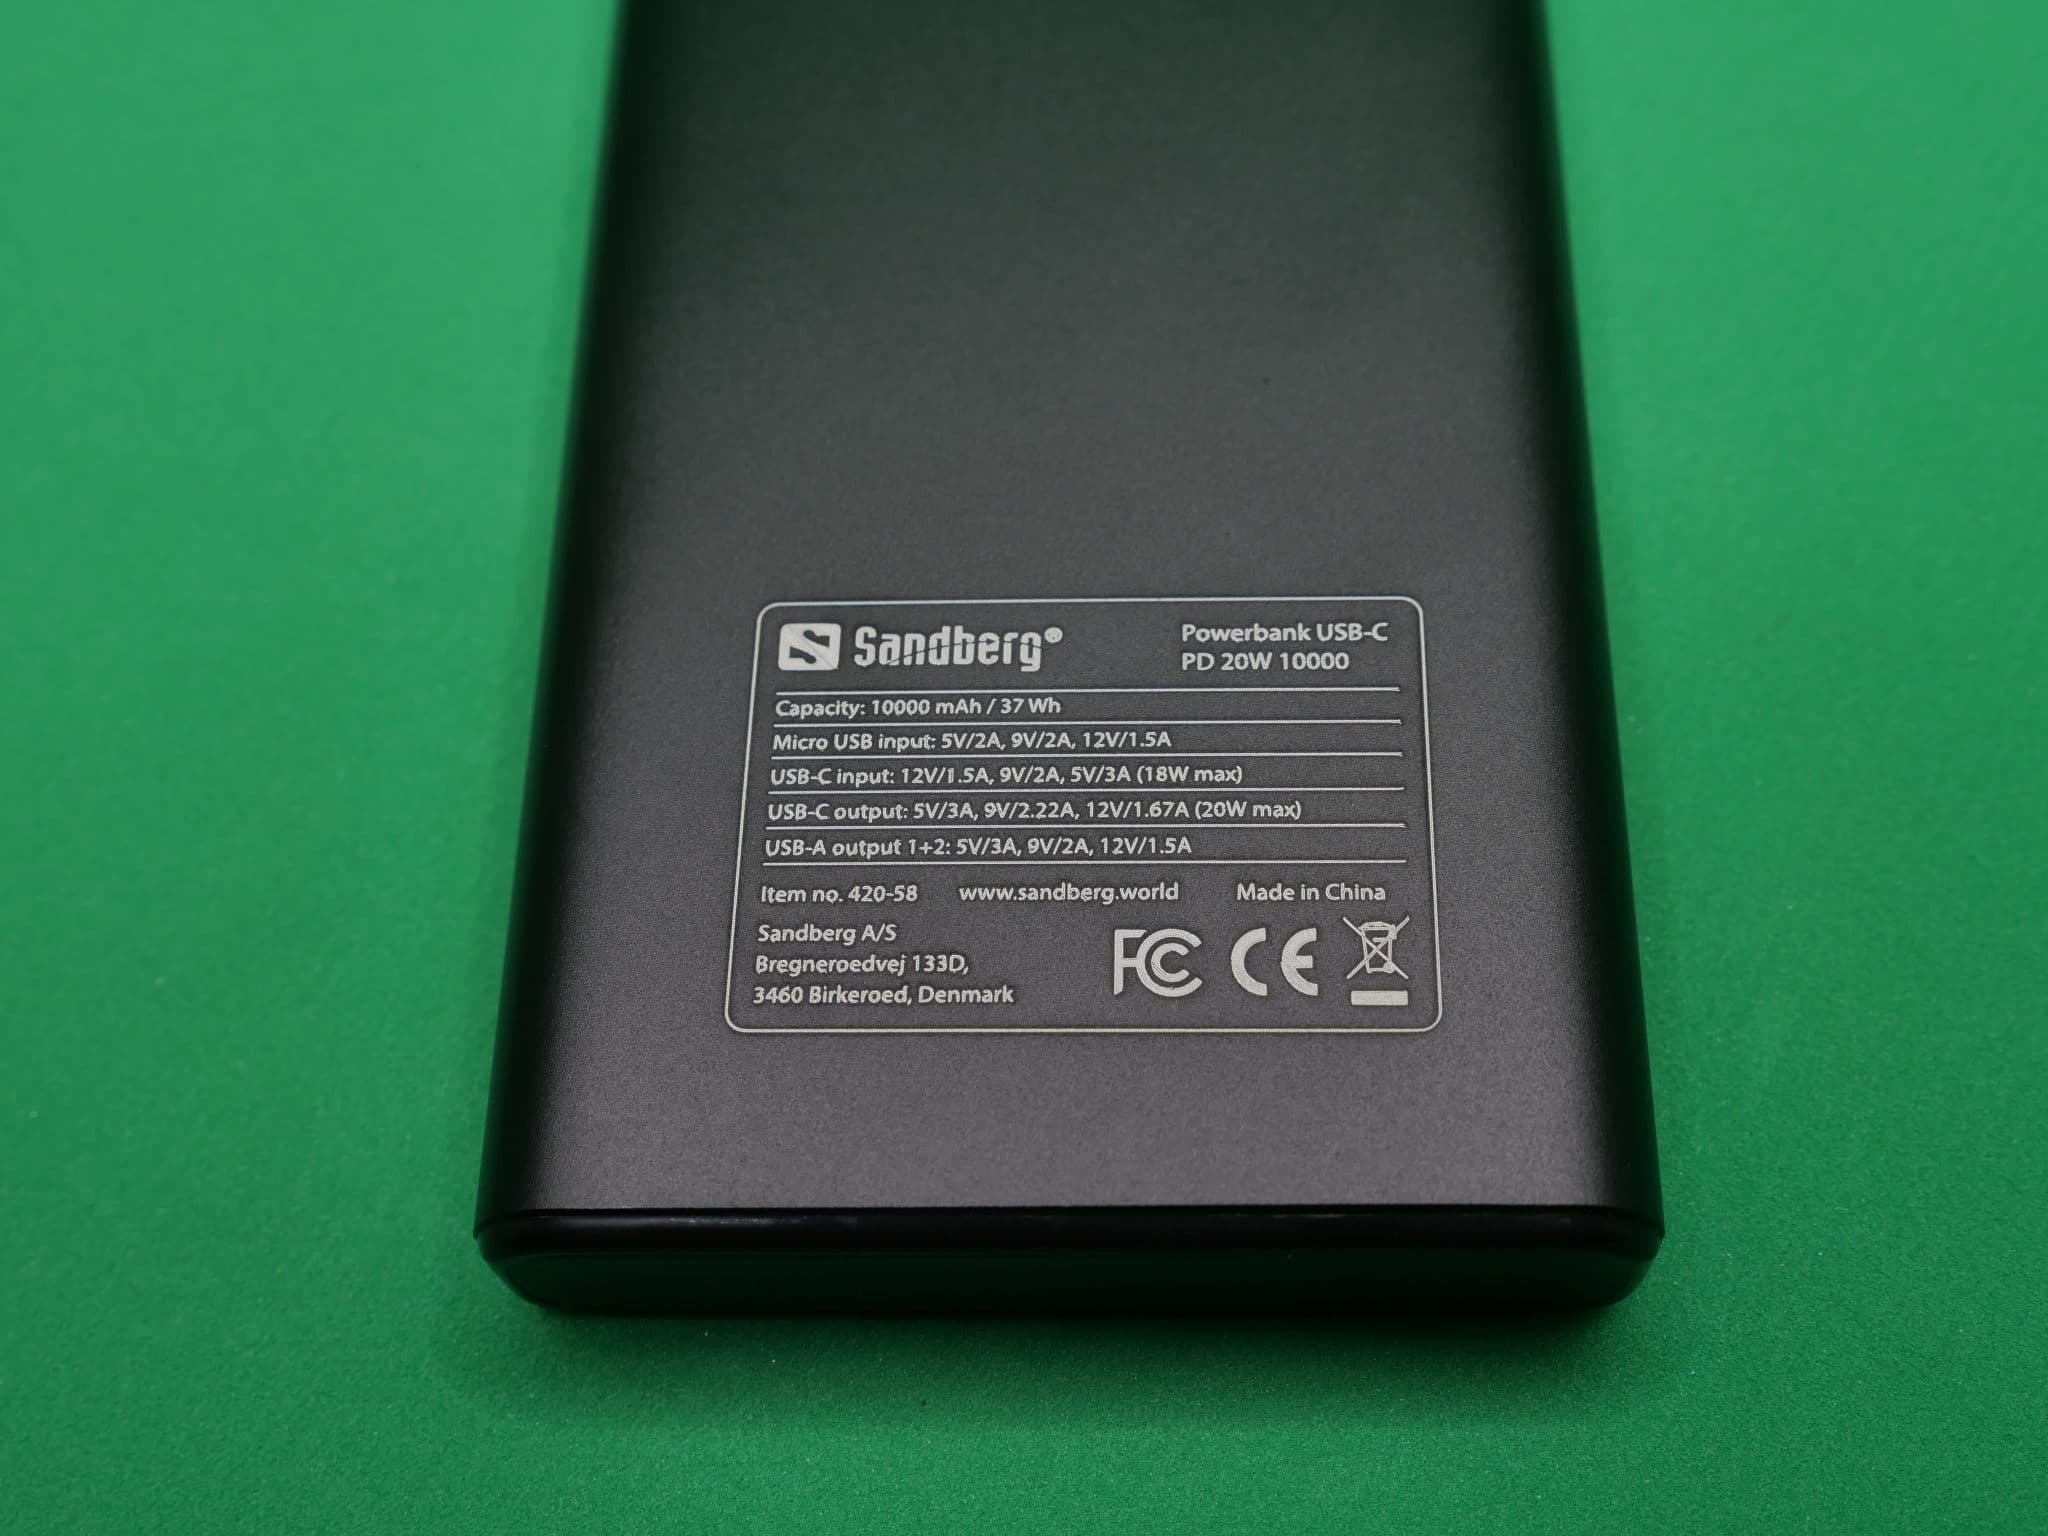 Powerbank Sandberg USB-C PD 20W 10000 modalità ricarica